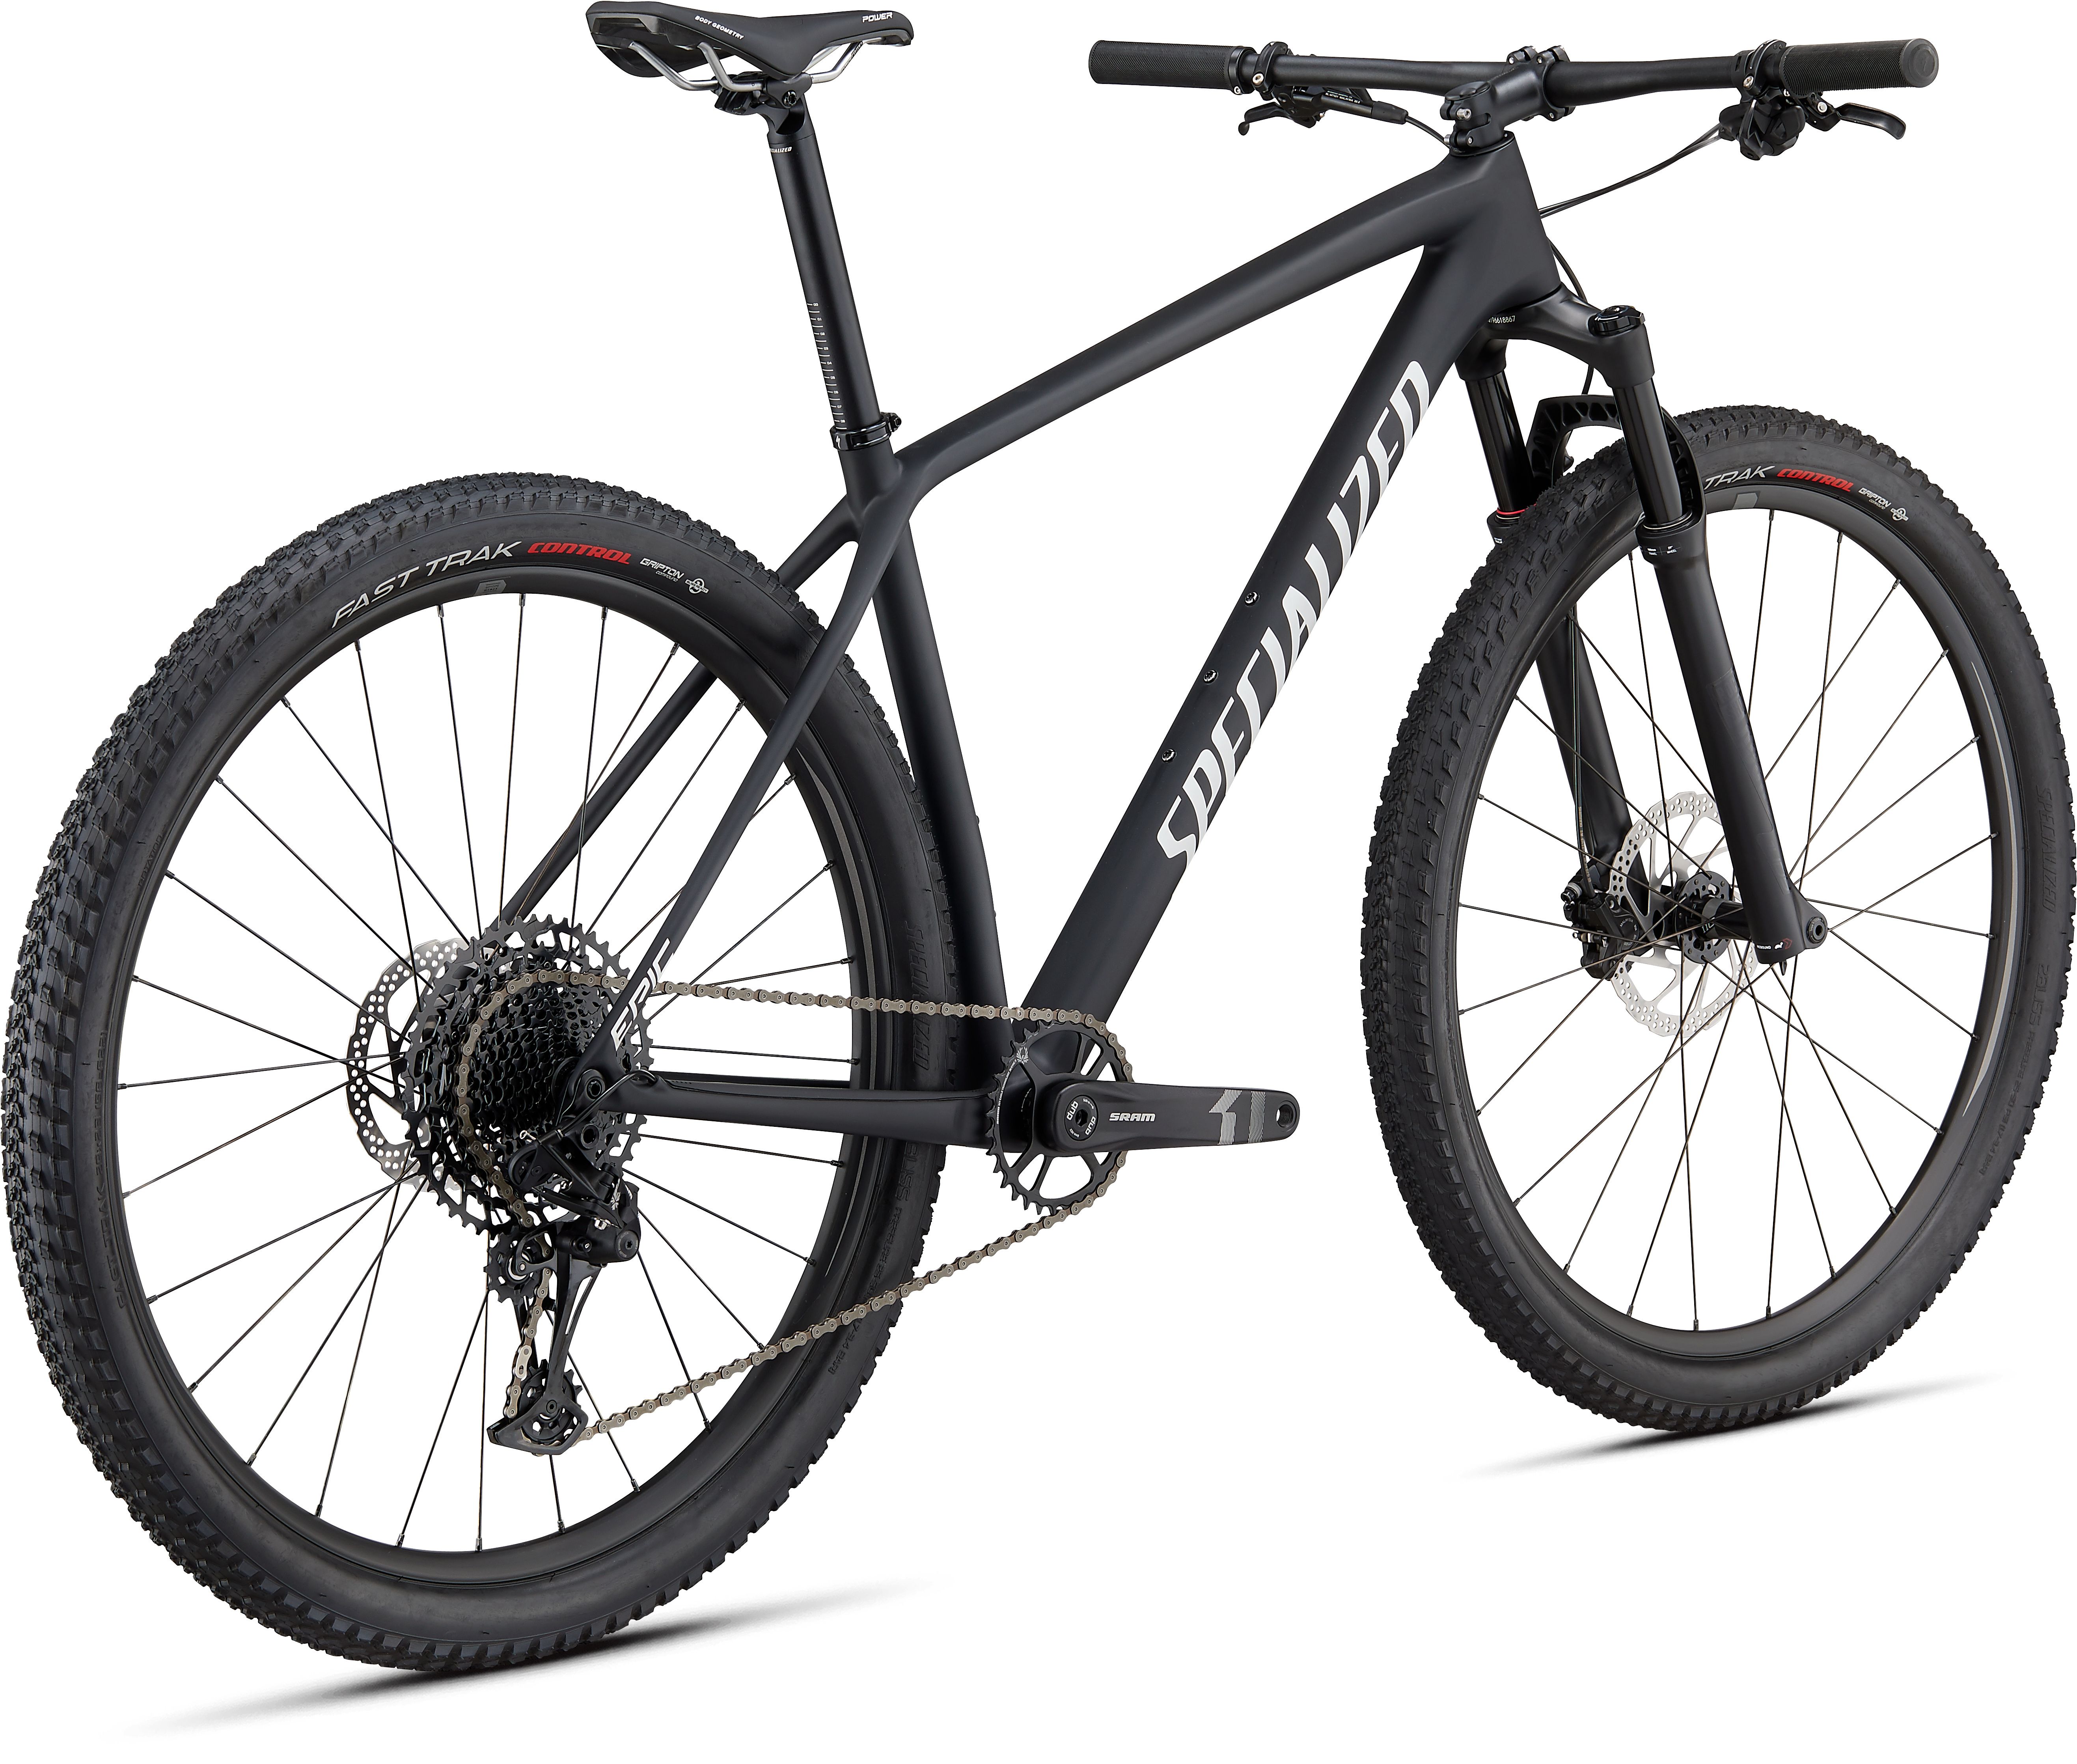 Specialized Epic Hardtail 29er Mountain Bike 2020 £2248.99